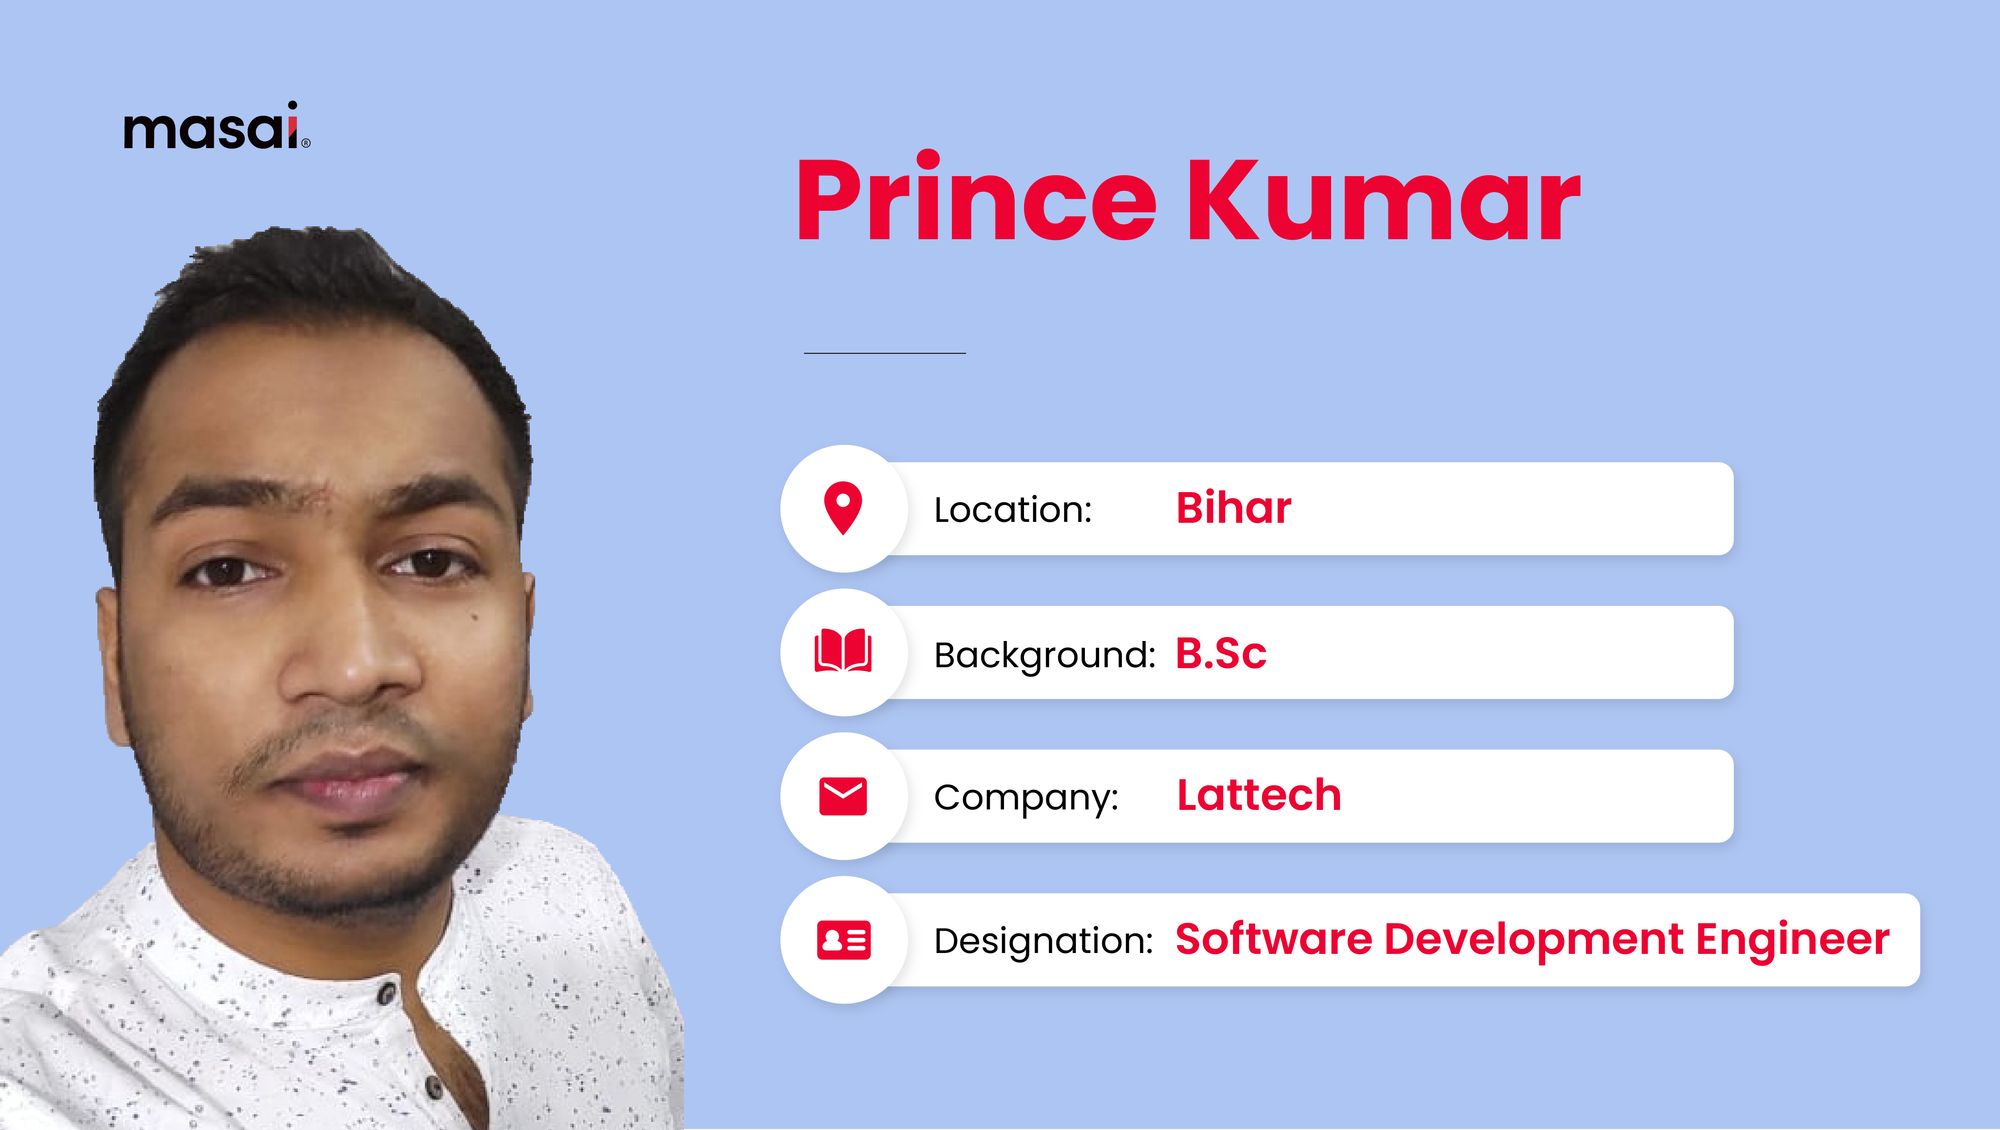 Prince Kumar - A Masai graduate now working as SDE at Lattech